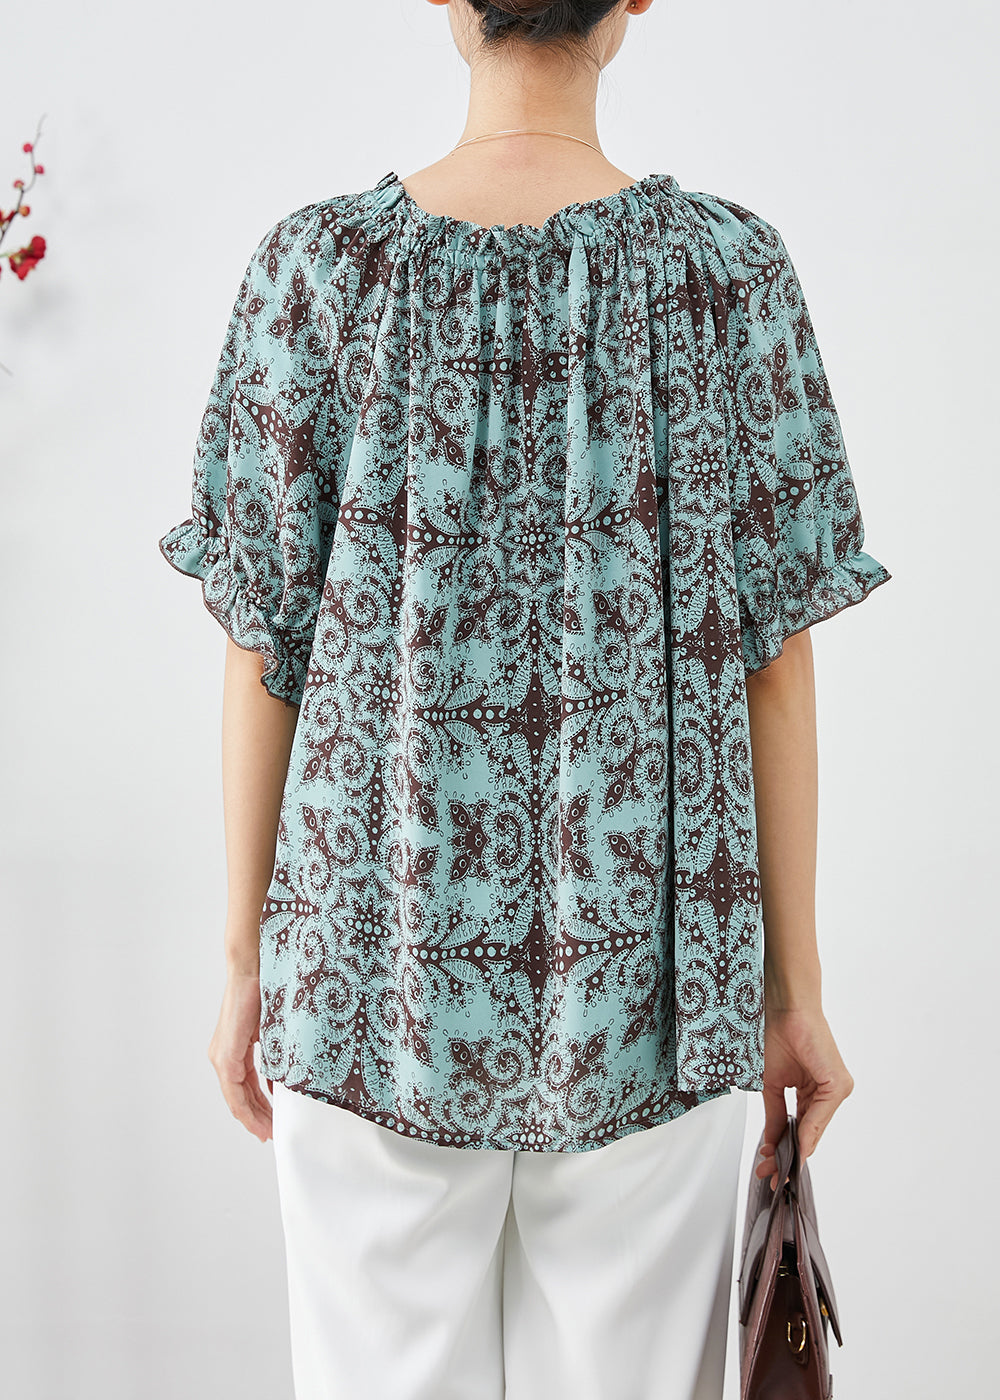 Blue Print Chiffon Shirt Tops Oversized Summer